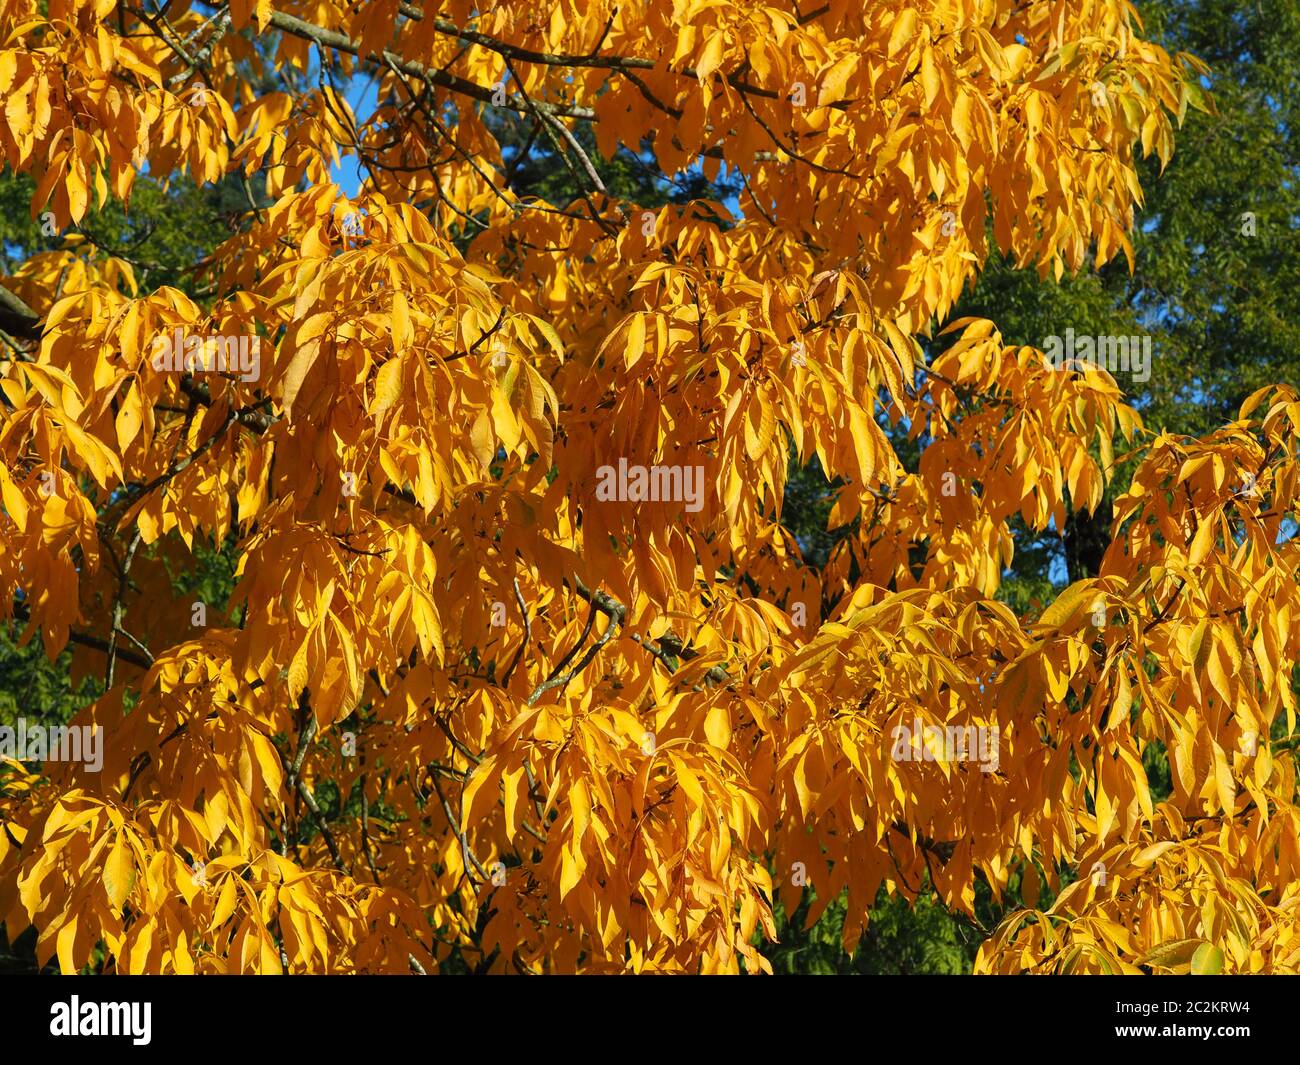 Stunning bright yellow foliage on braches of the shagbark hickory tree, Carya ovata, in autumn Stock Photo